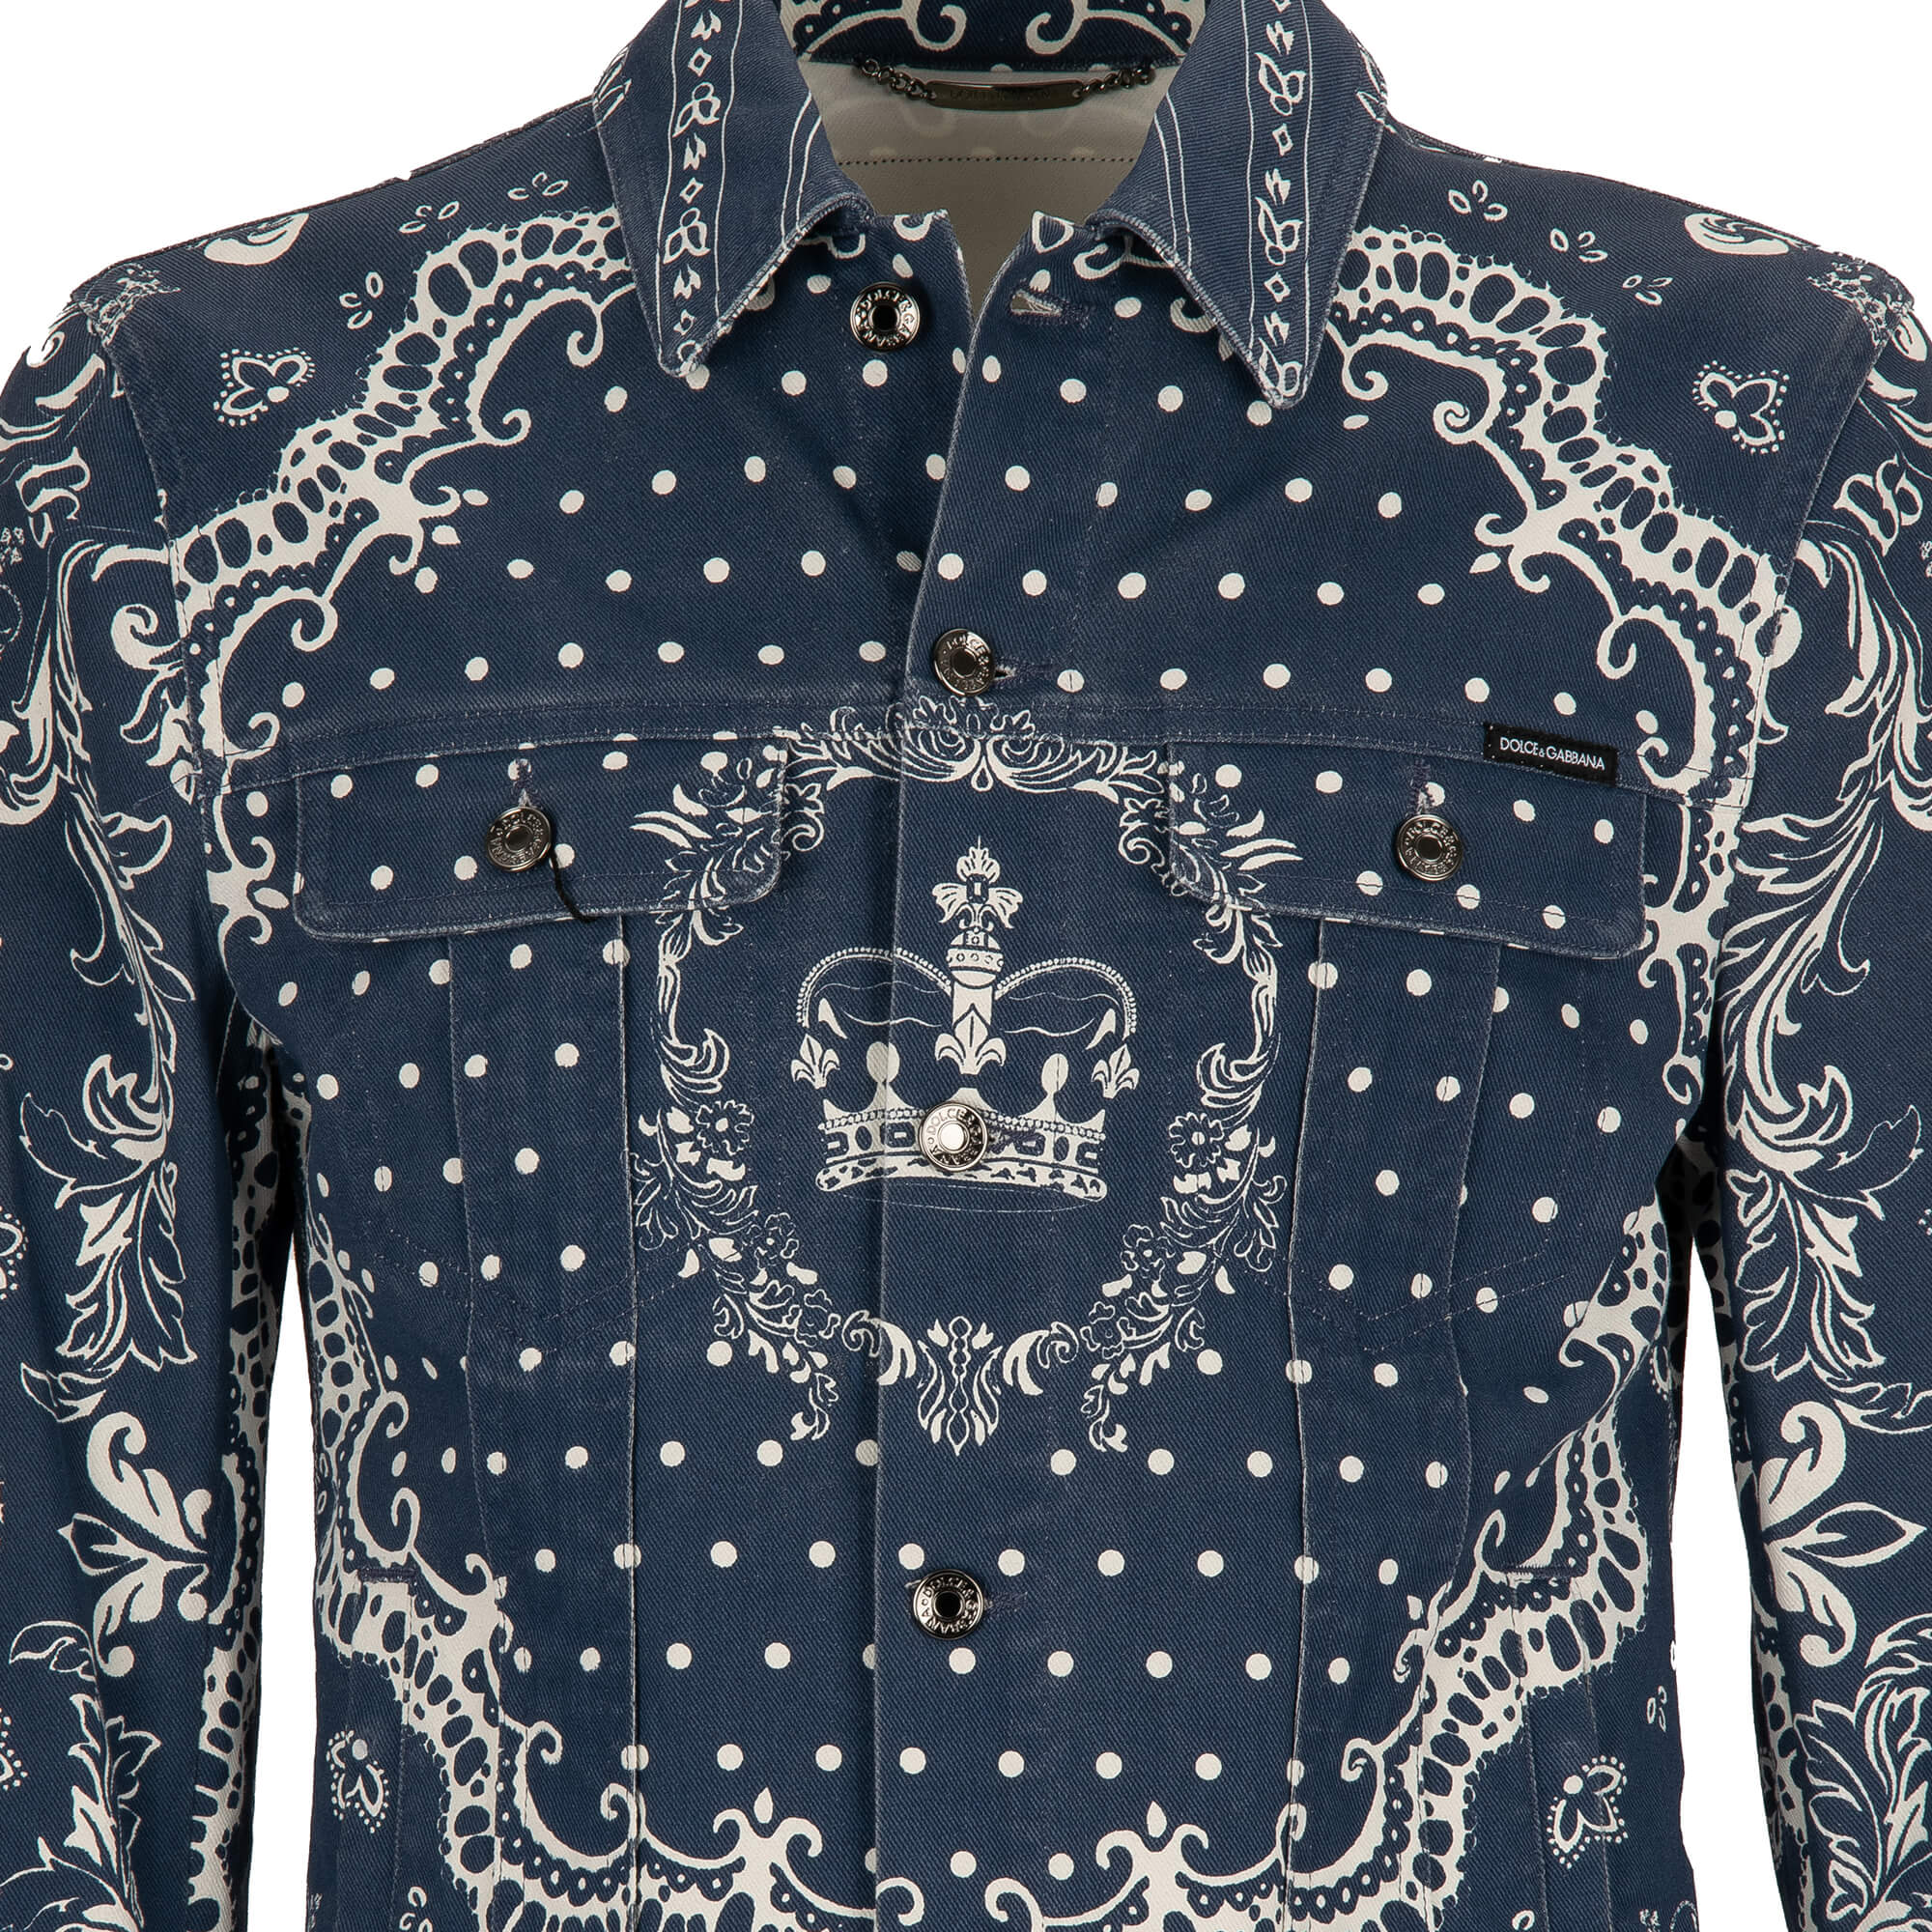 DG Jacquard Denim Jacket in Blue - Dolce Gabbana